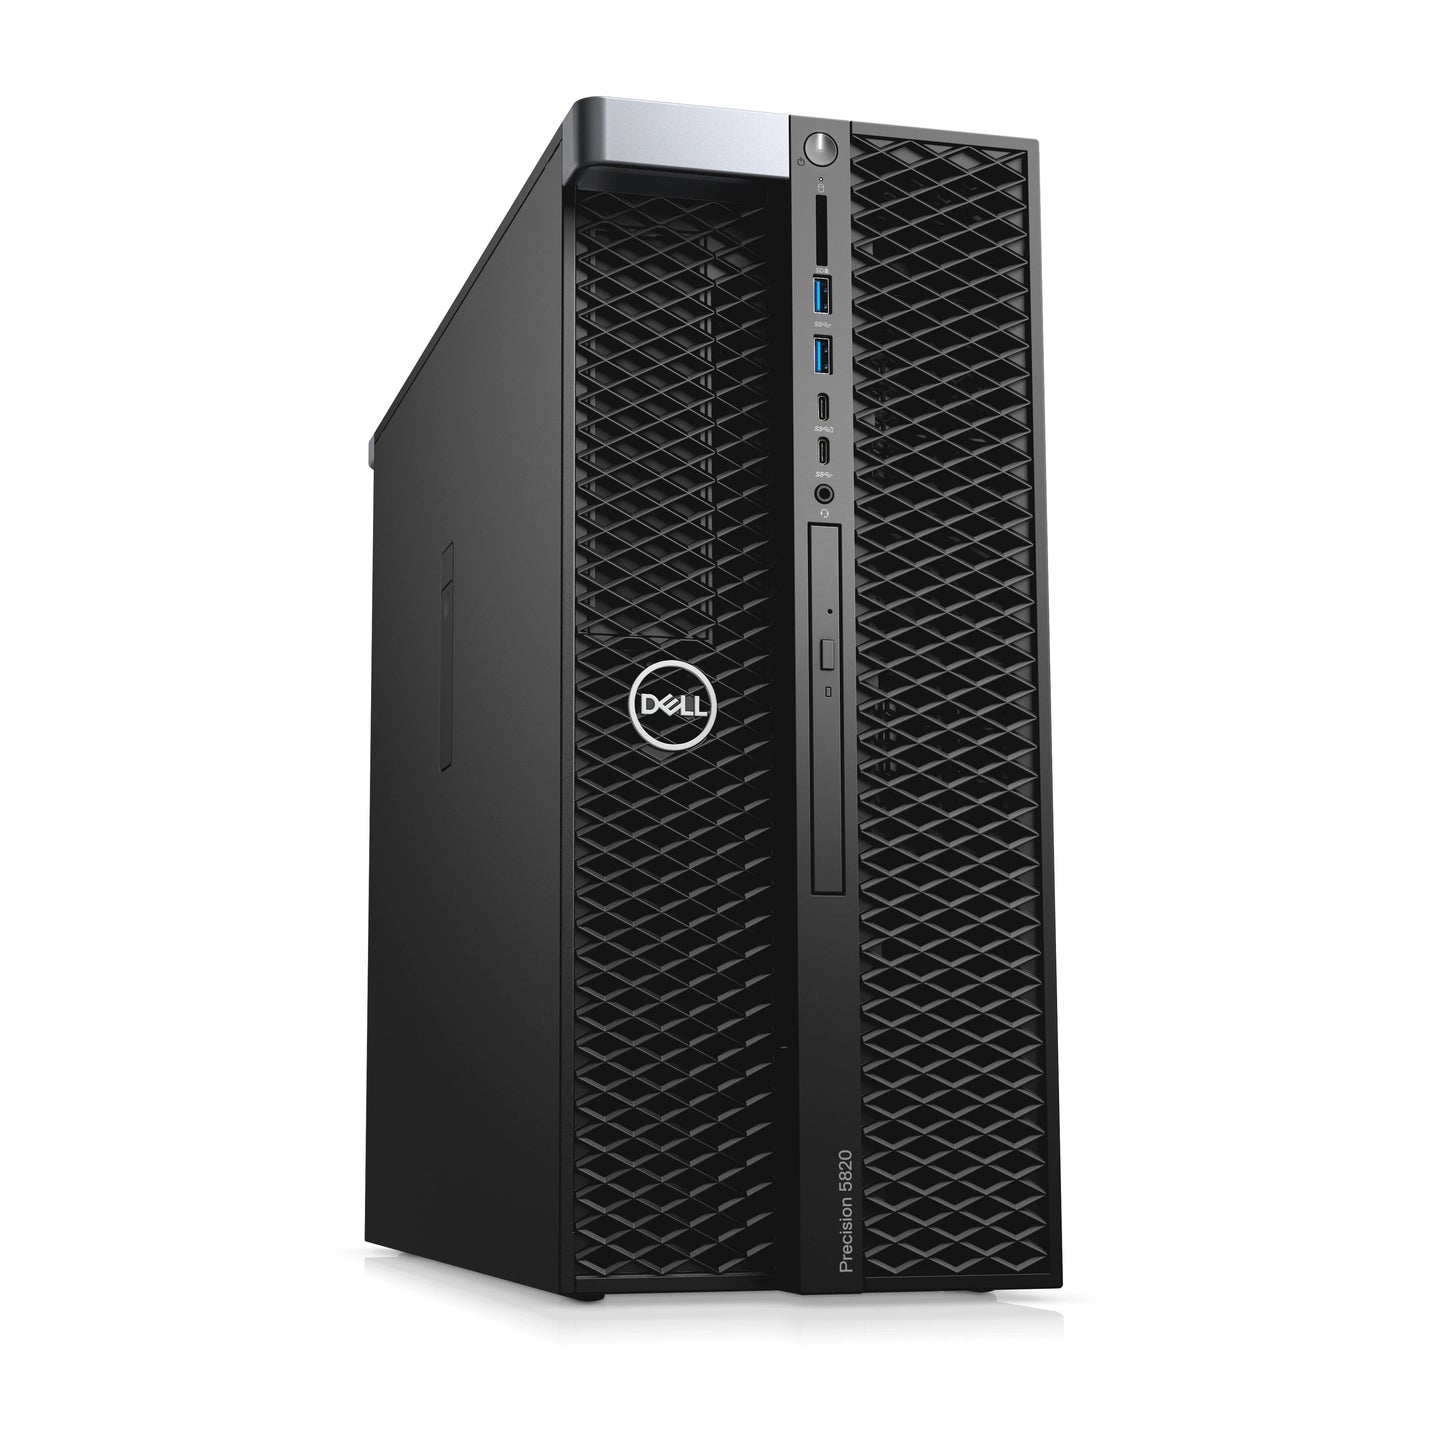 Dell Precision 5820 Tower Workstation Desktop Computers (Open Box)